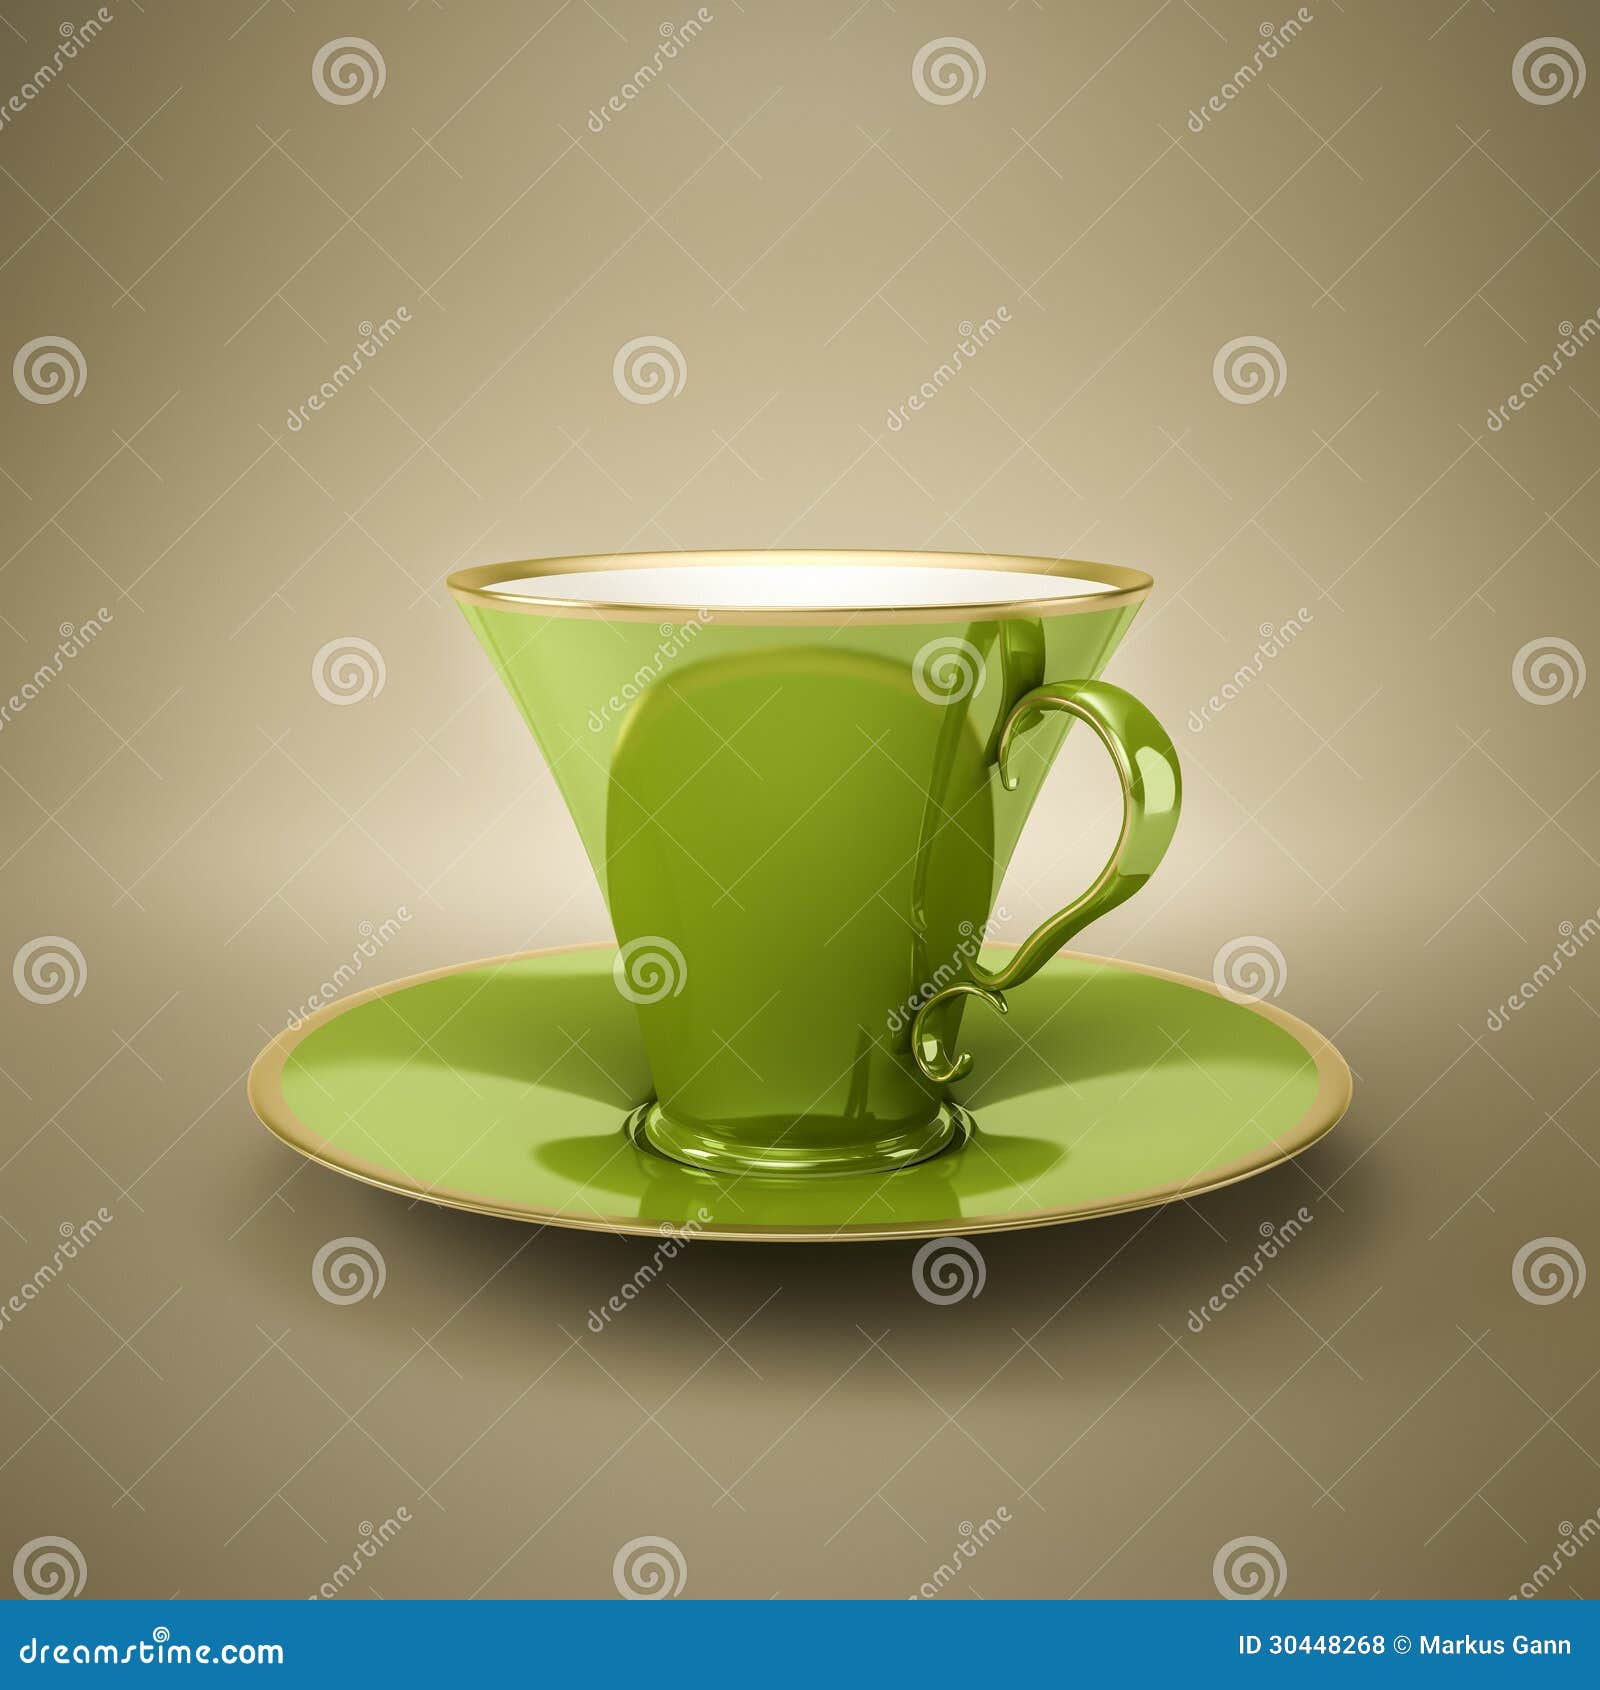 Stock Elegant Vintage vintage  Royalty   Green  Photos Image Free Coffee cup Cup coffee